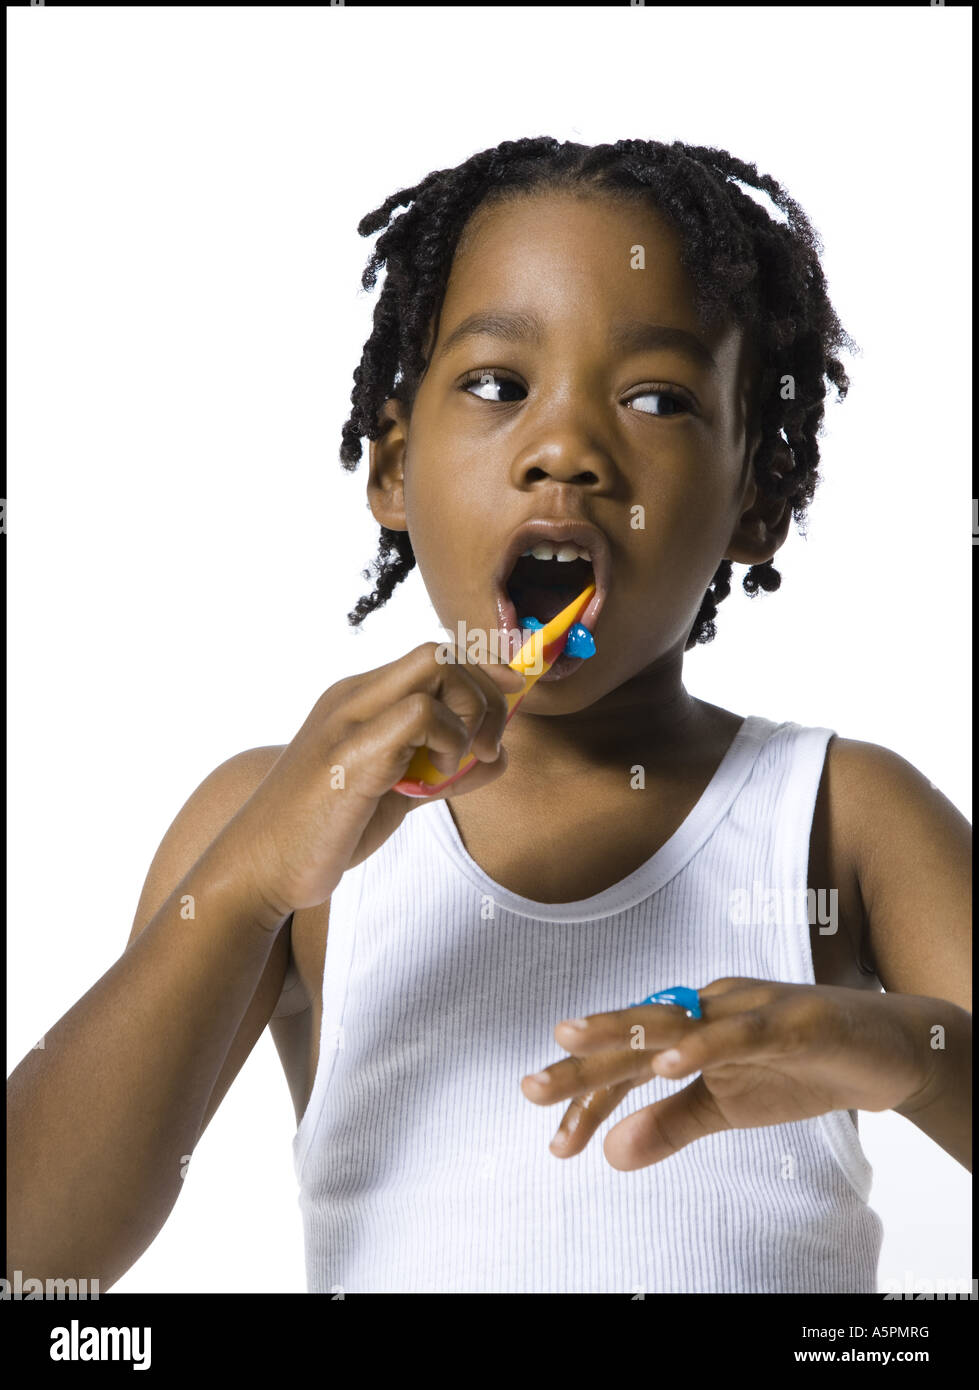 African American Boy Brushing Teeth High Resolution Stock Photography